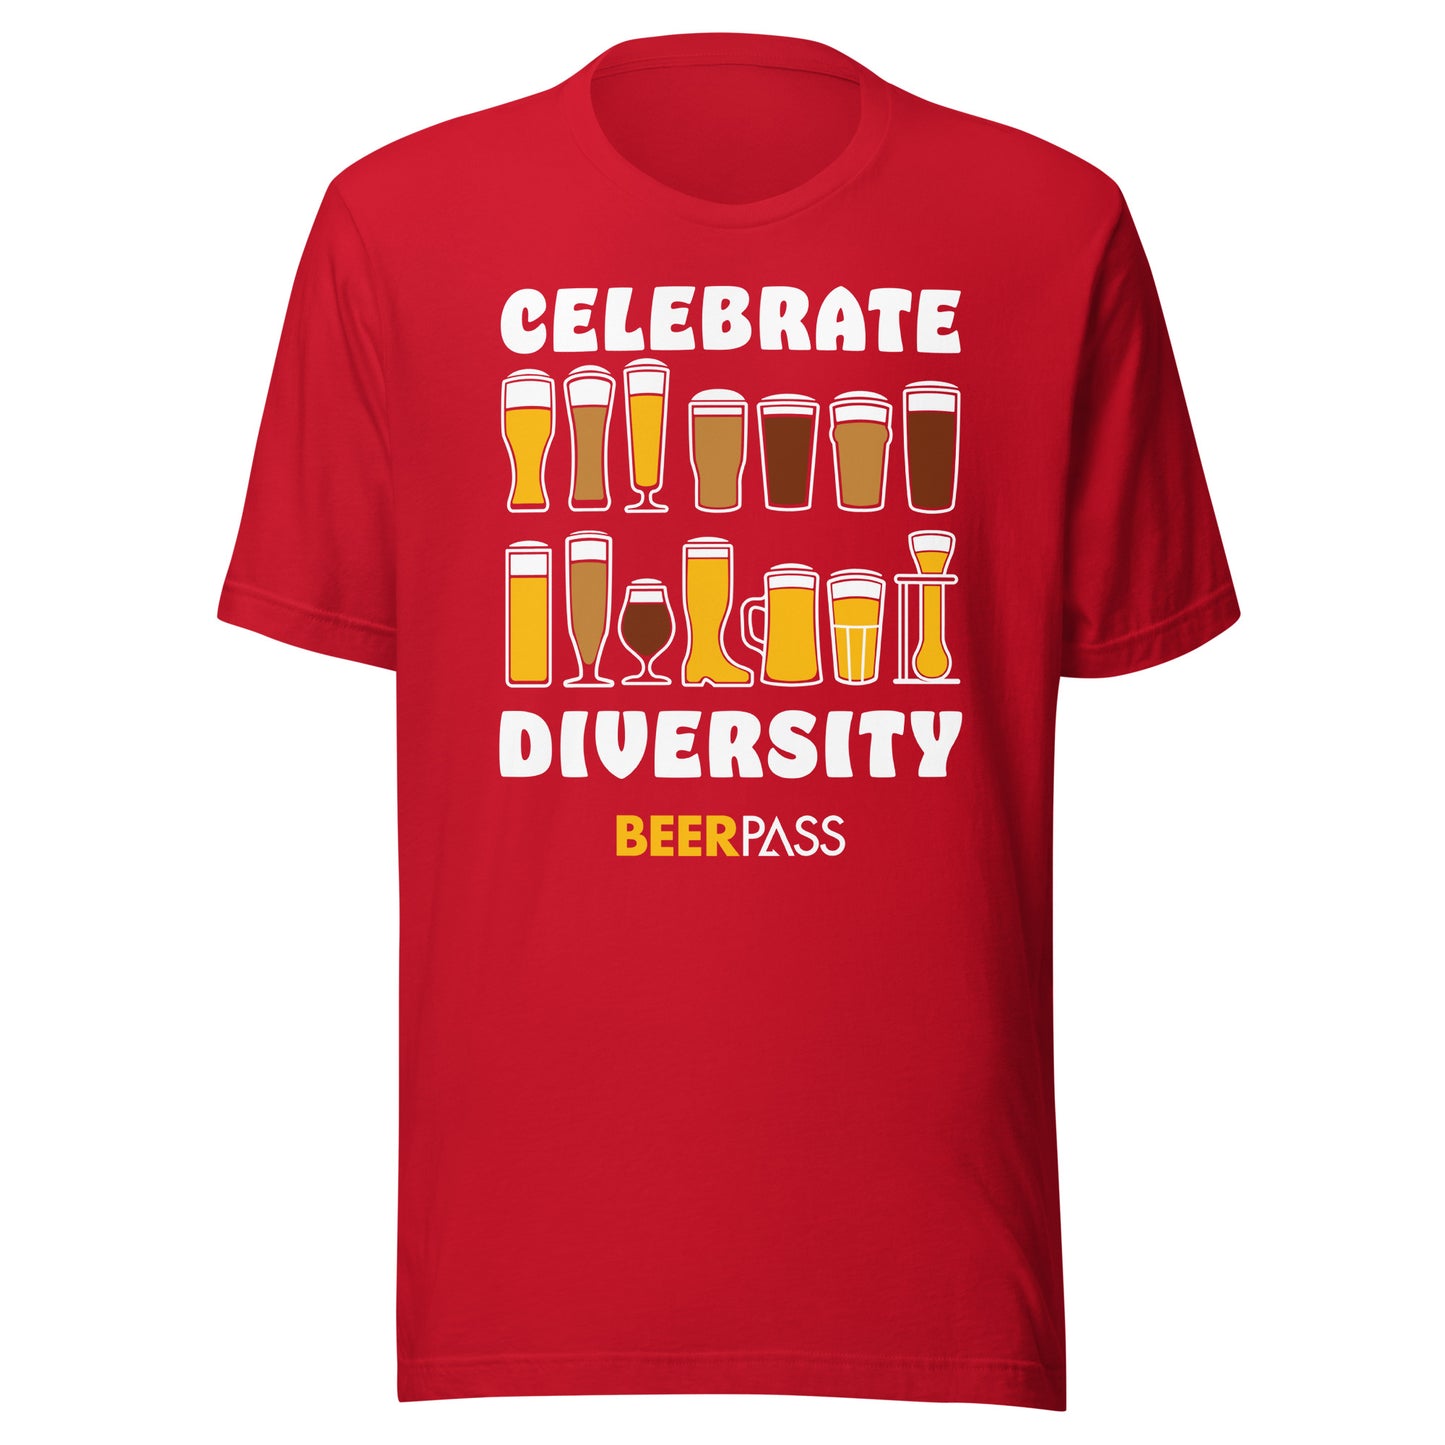 Celebrate Diversity!